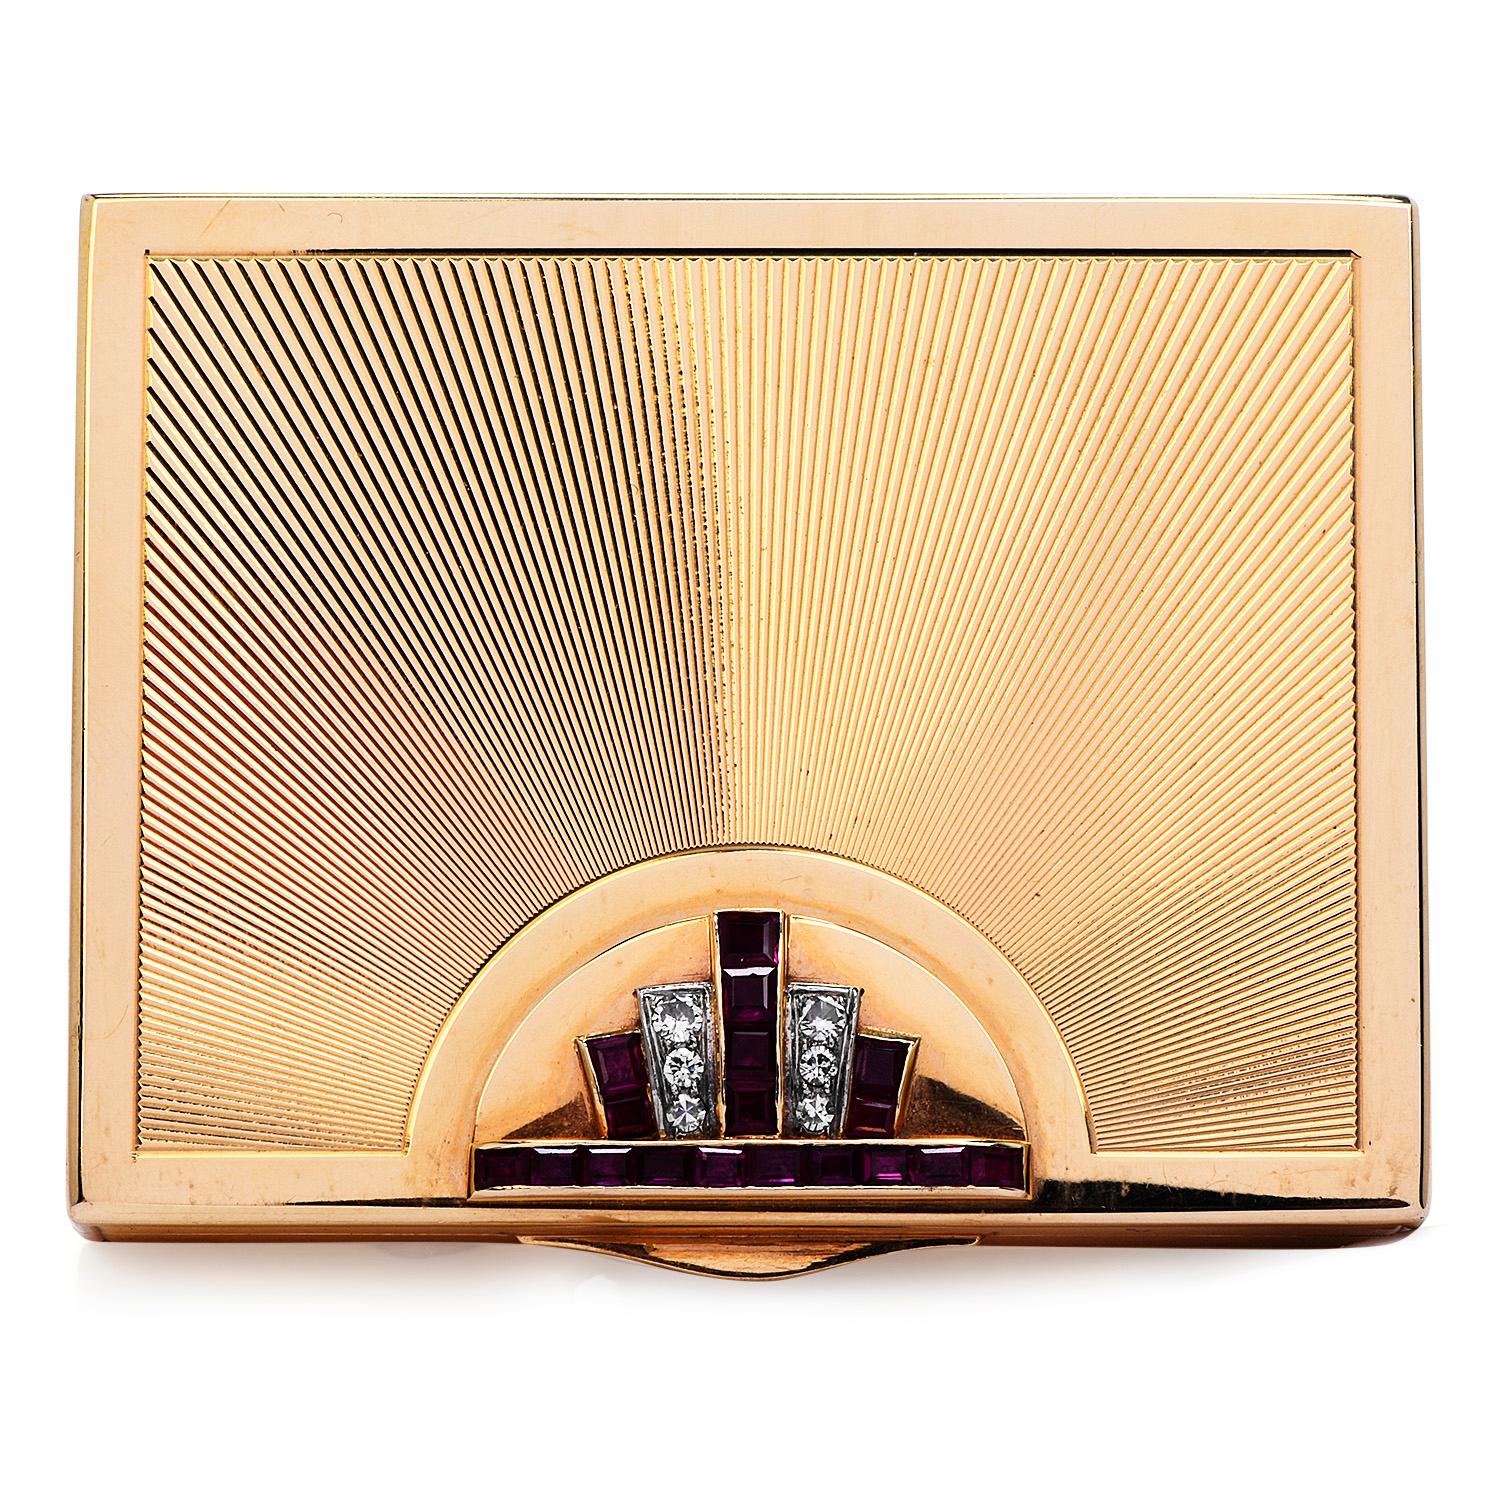 vintage gold compact mirror